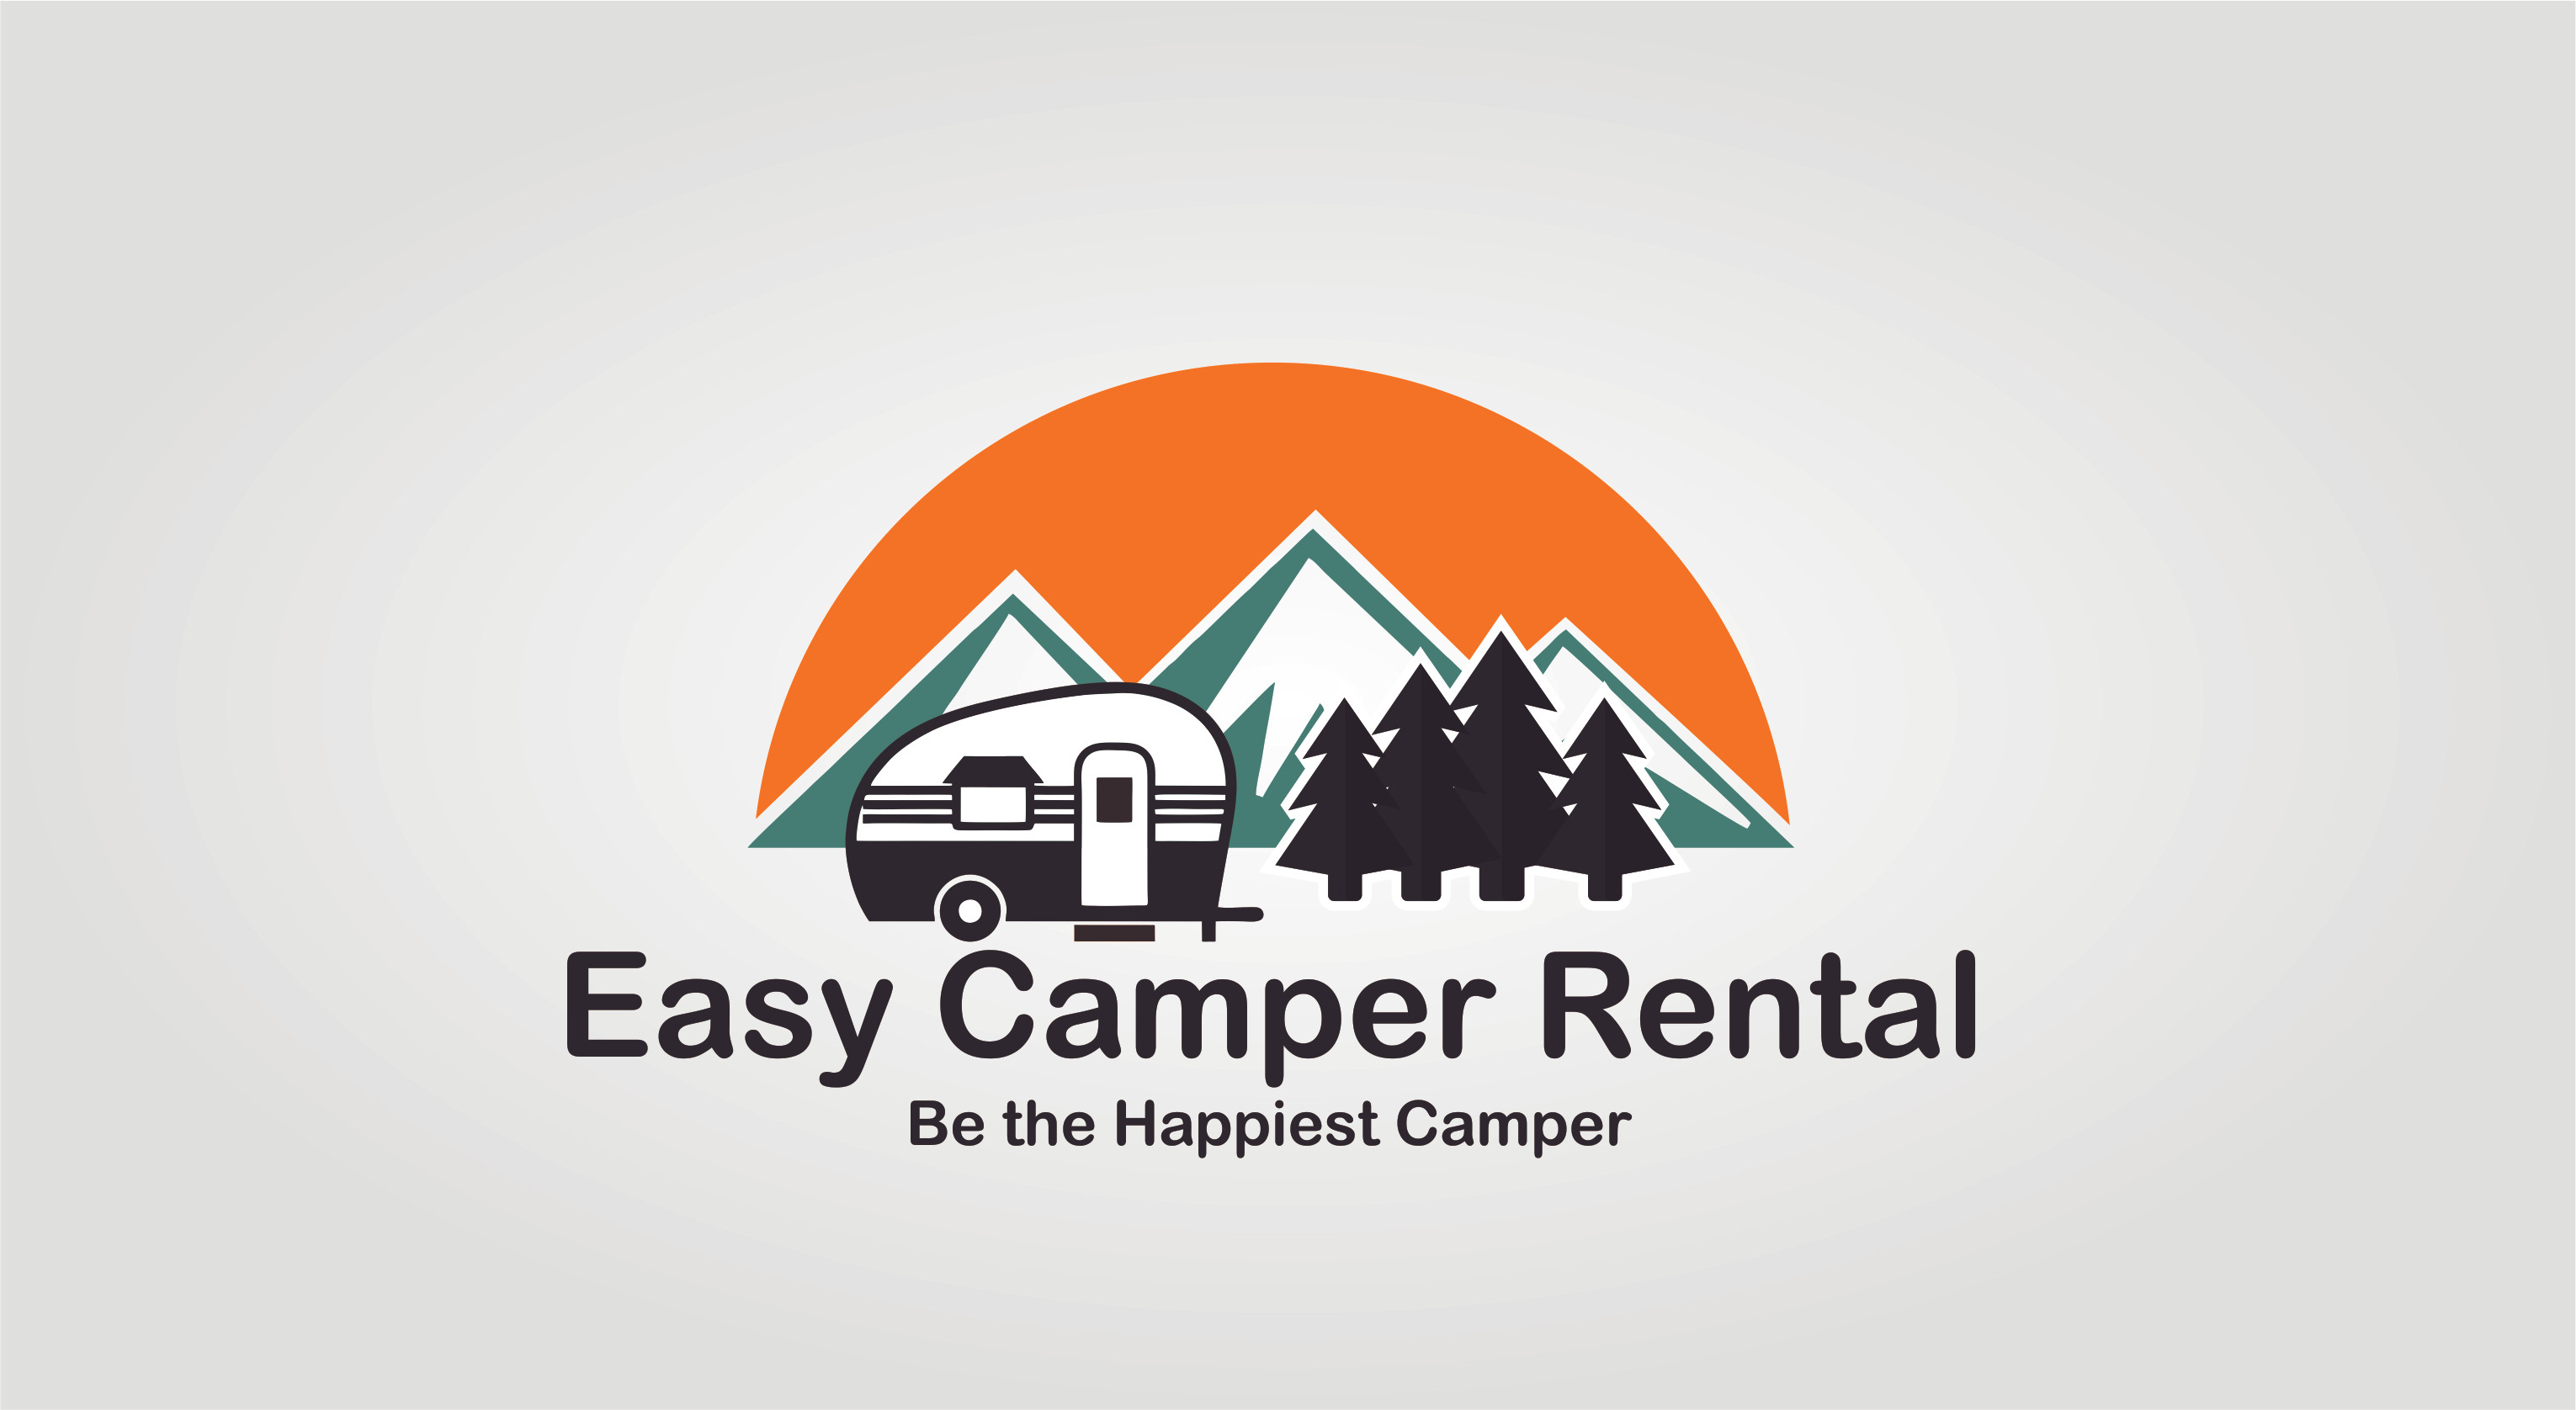 Premier RV Rental Business Utah | Travel Trailer Rental - Easy Camper Rental